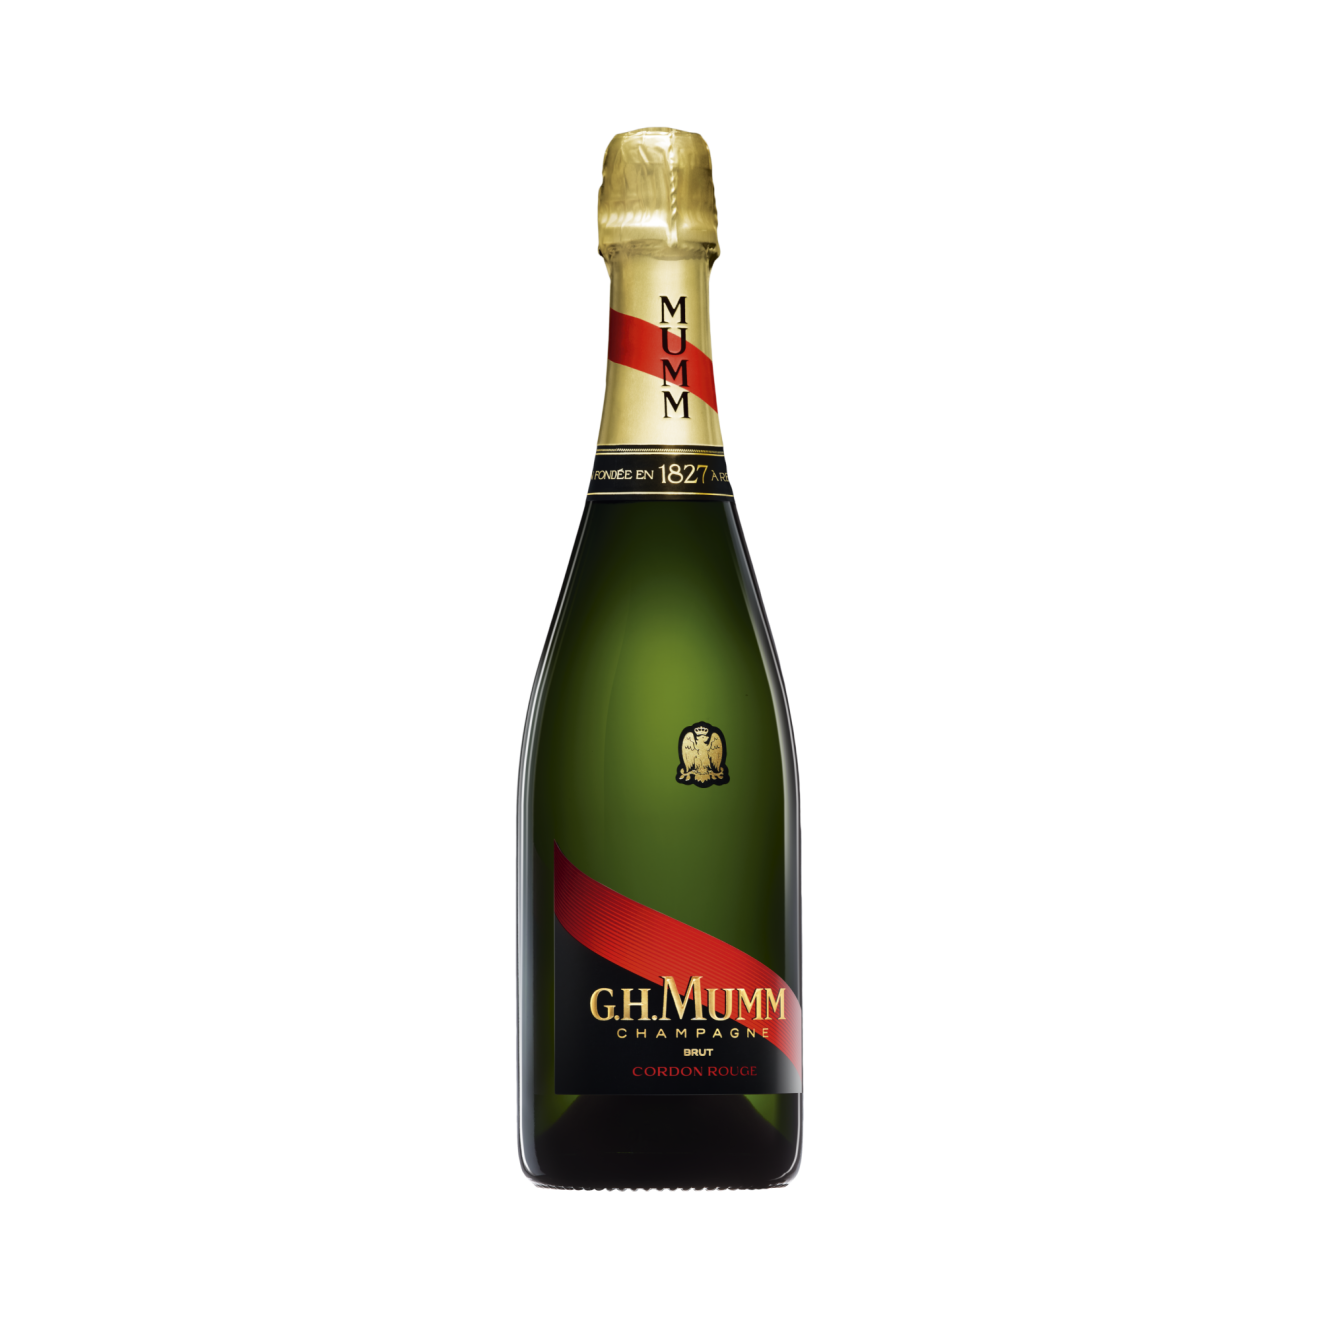 N.V. G.H. Mumm (Cordon Rouge) Brut Champagne